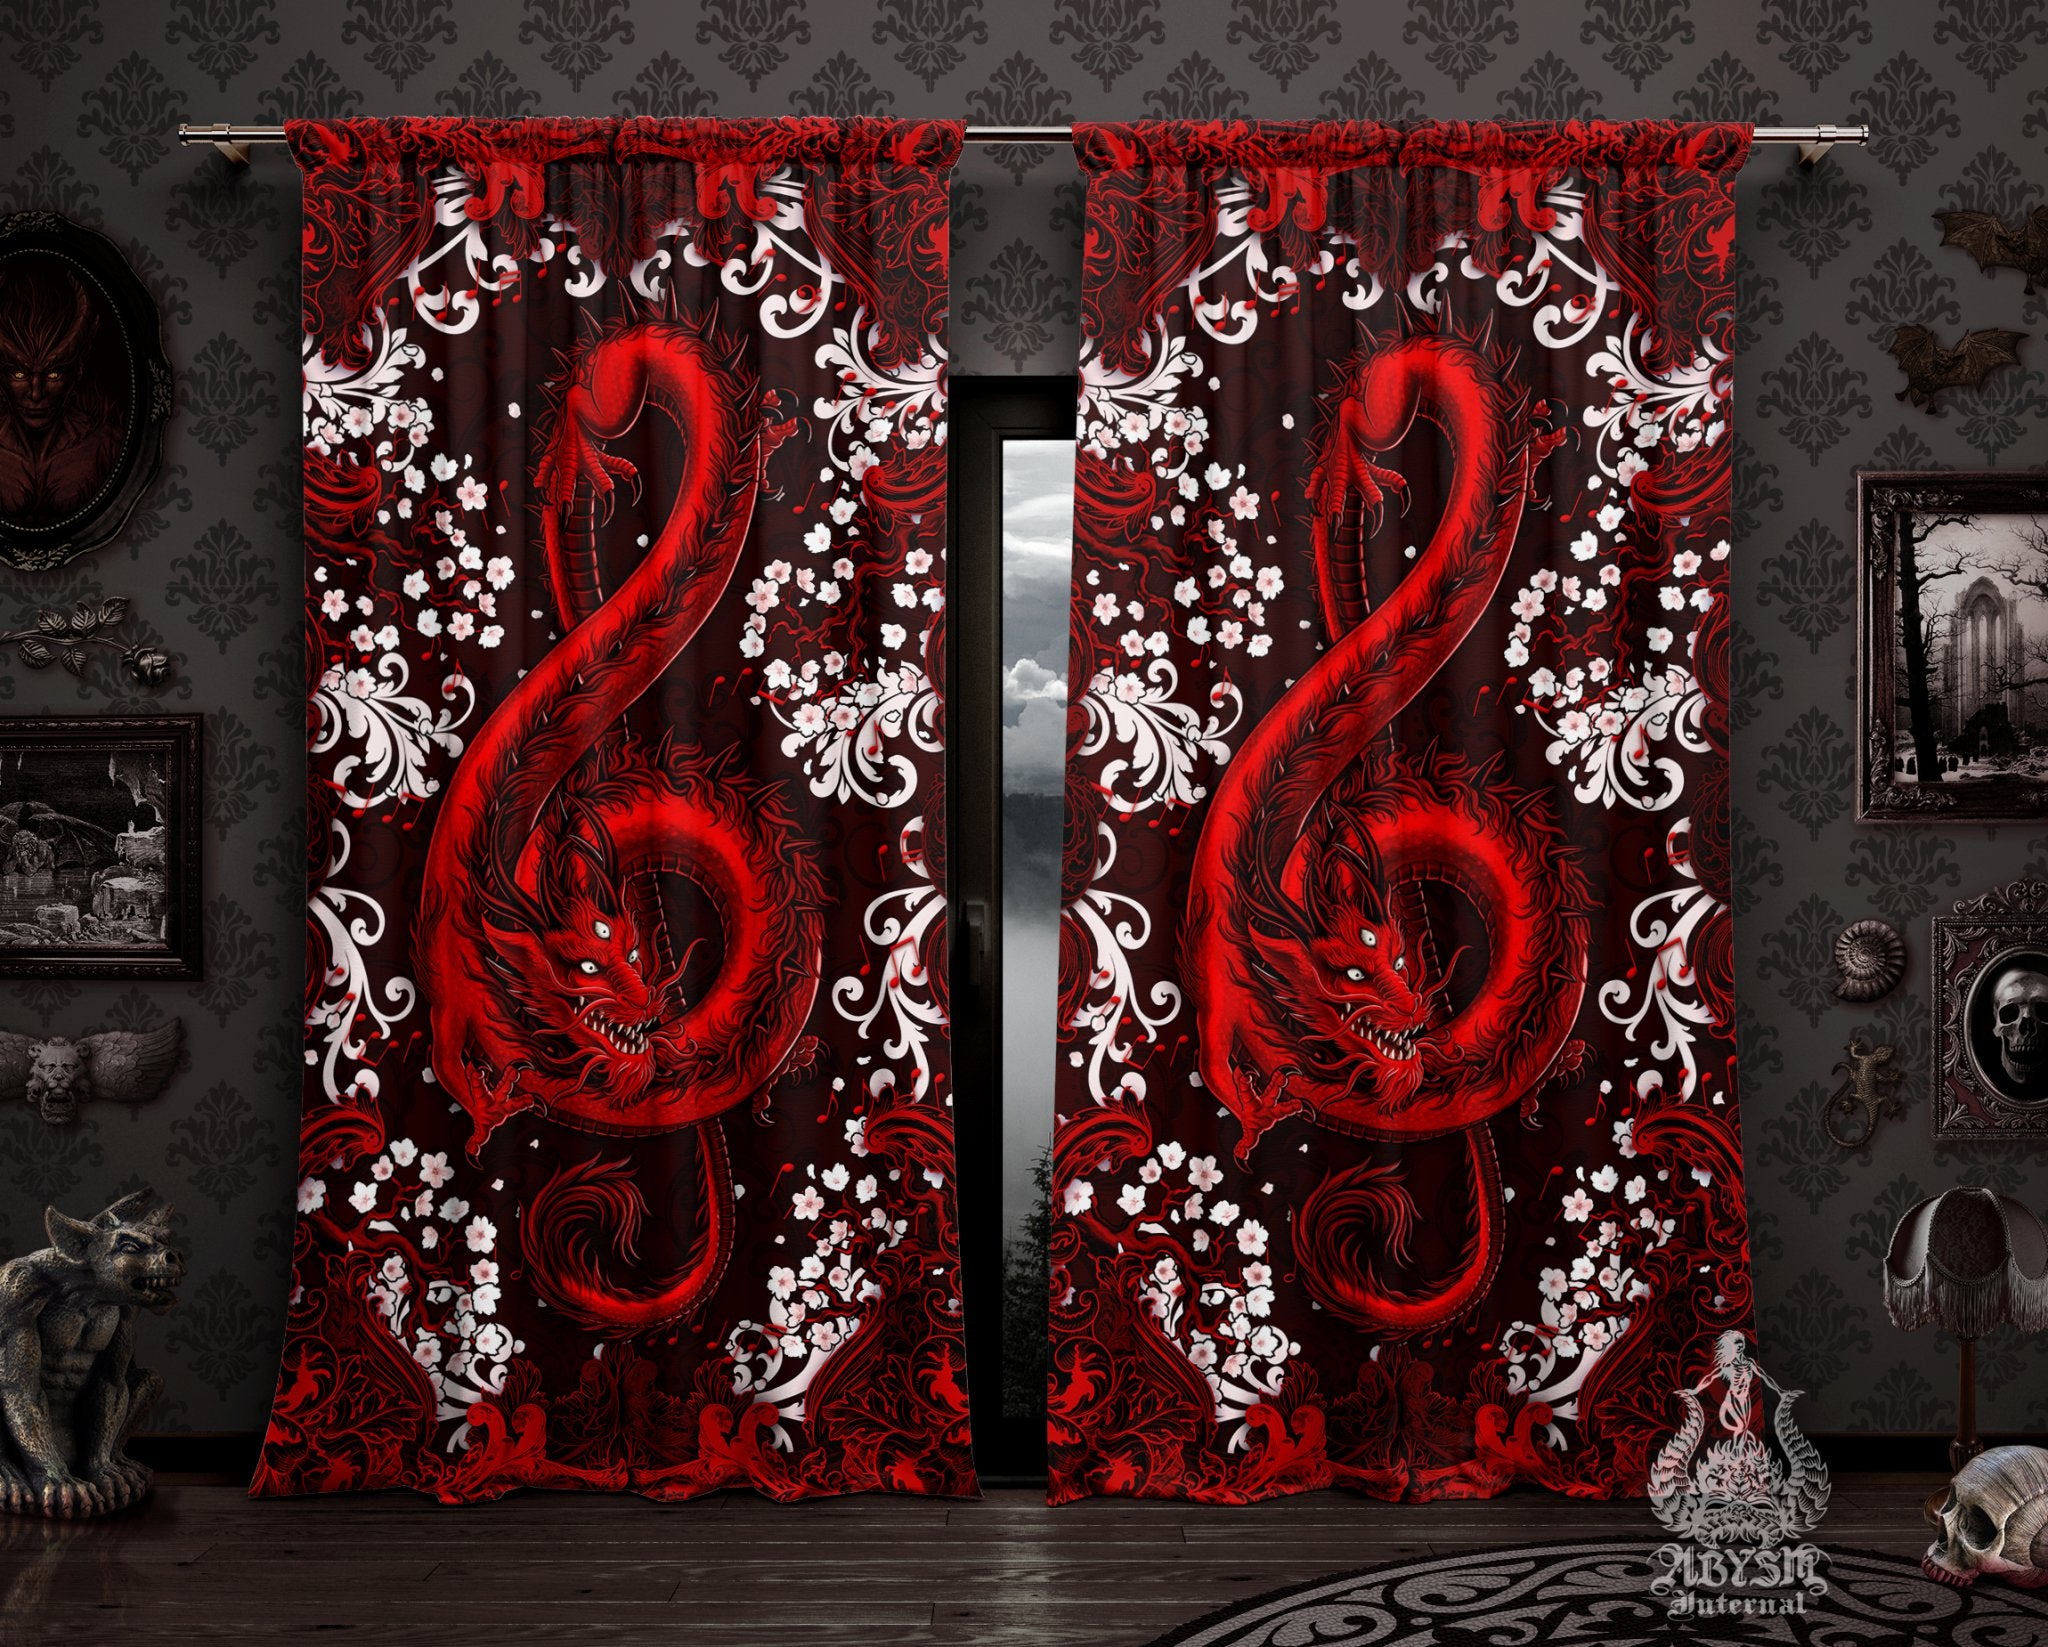 Red Dragon Curtains, 50x84' Printed Window Panels, Treble Clef, Music Art Print, Gothic Home Decor - Bloody Goth, Black - Abysm Internal